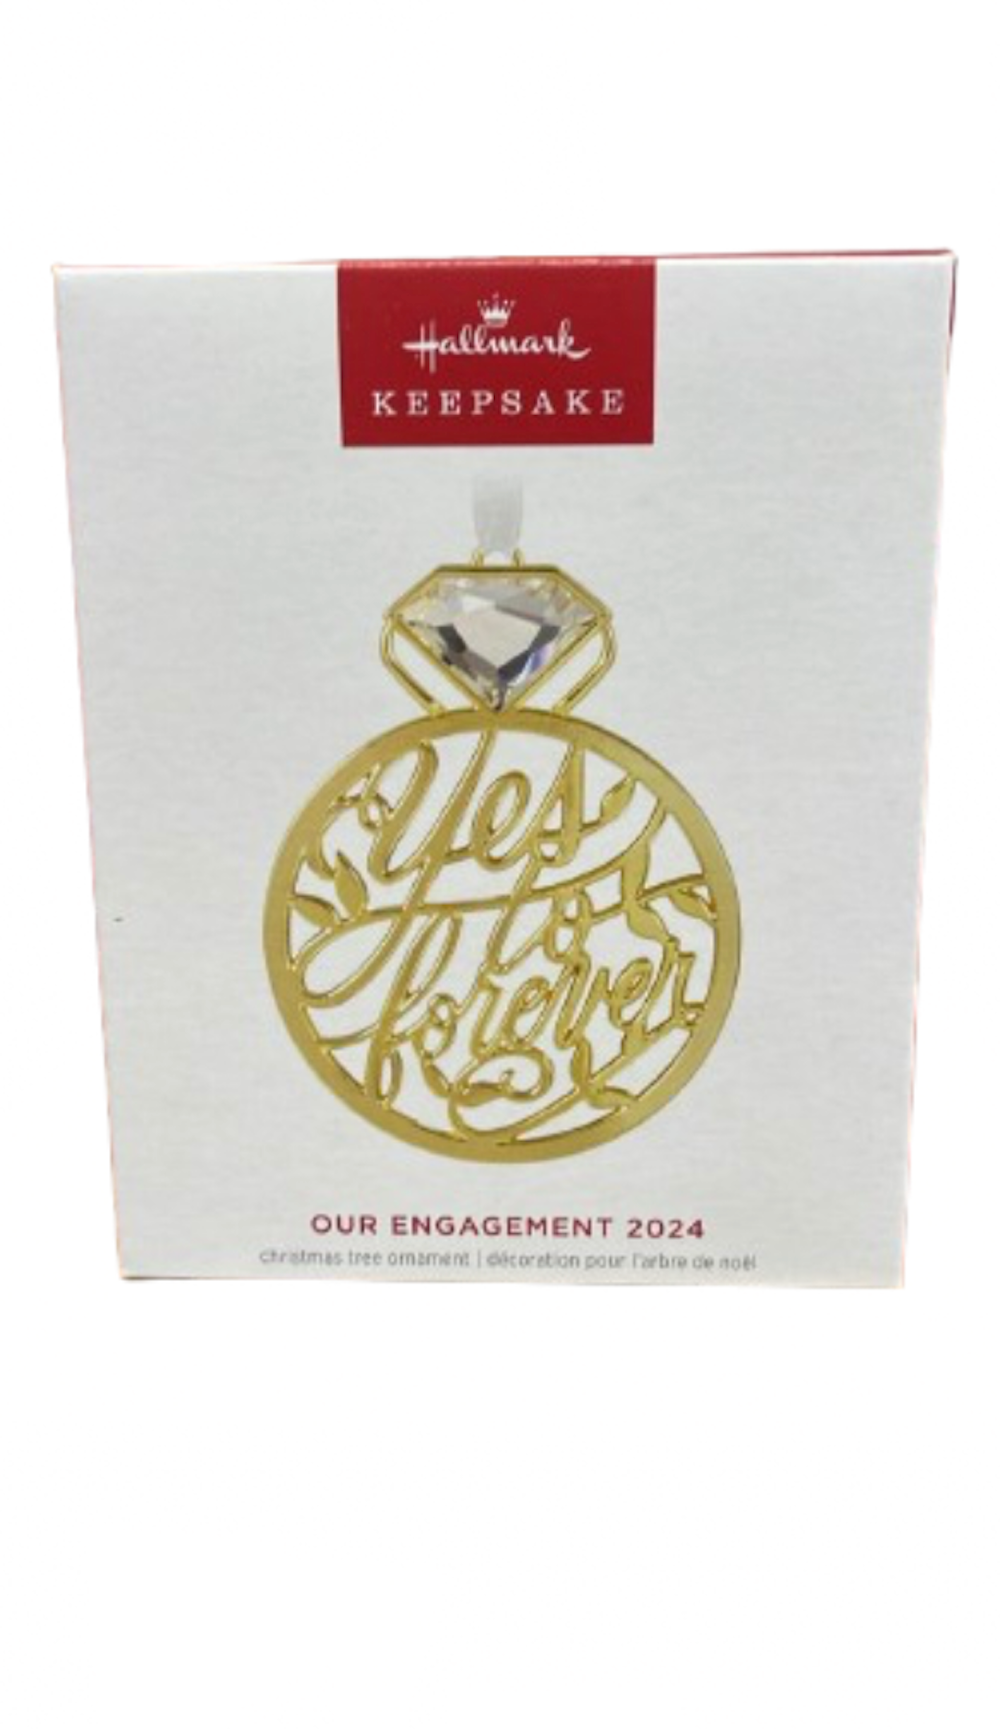 Hallmark Keepsake Our Engagement 2024 Metal Christmas Ornament New with Box